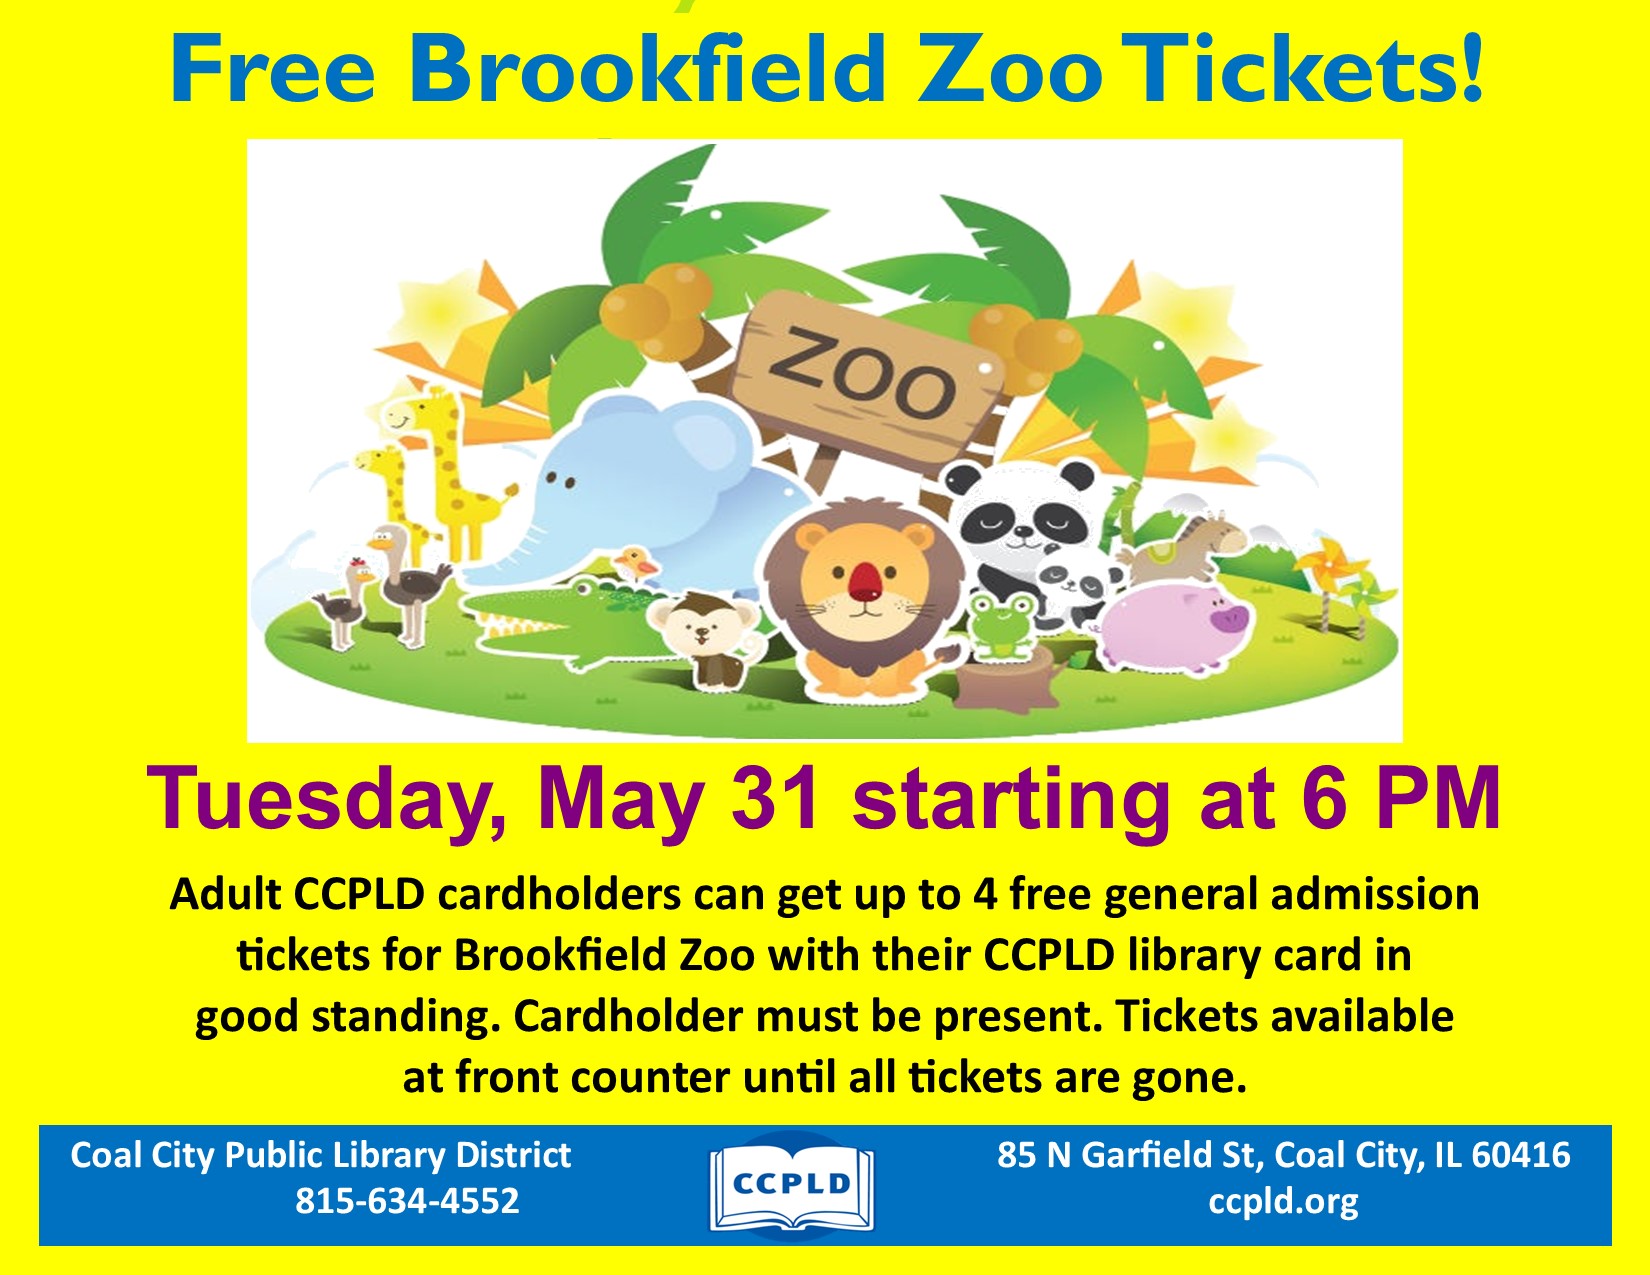 Brookfield Zoo Tickets Free  8 X 11 Landscape 